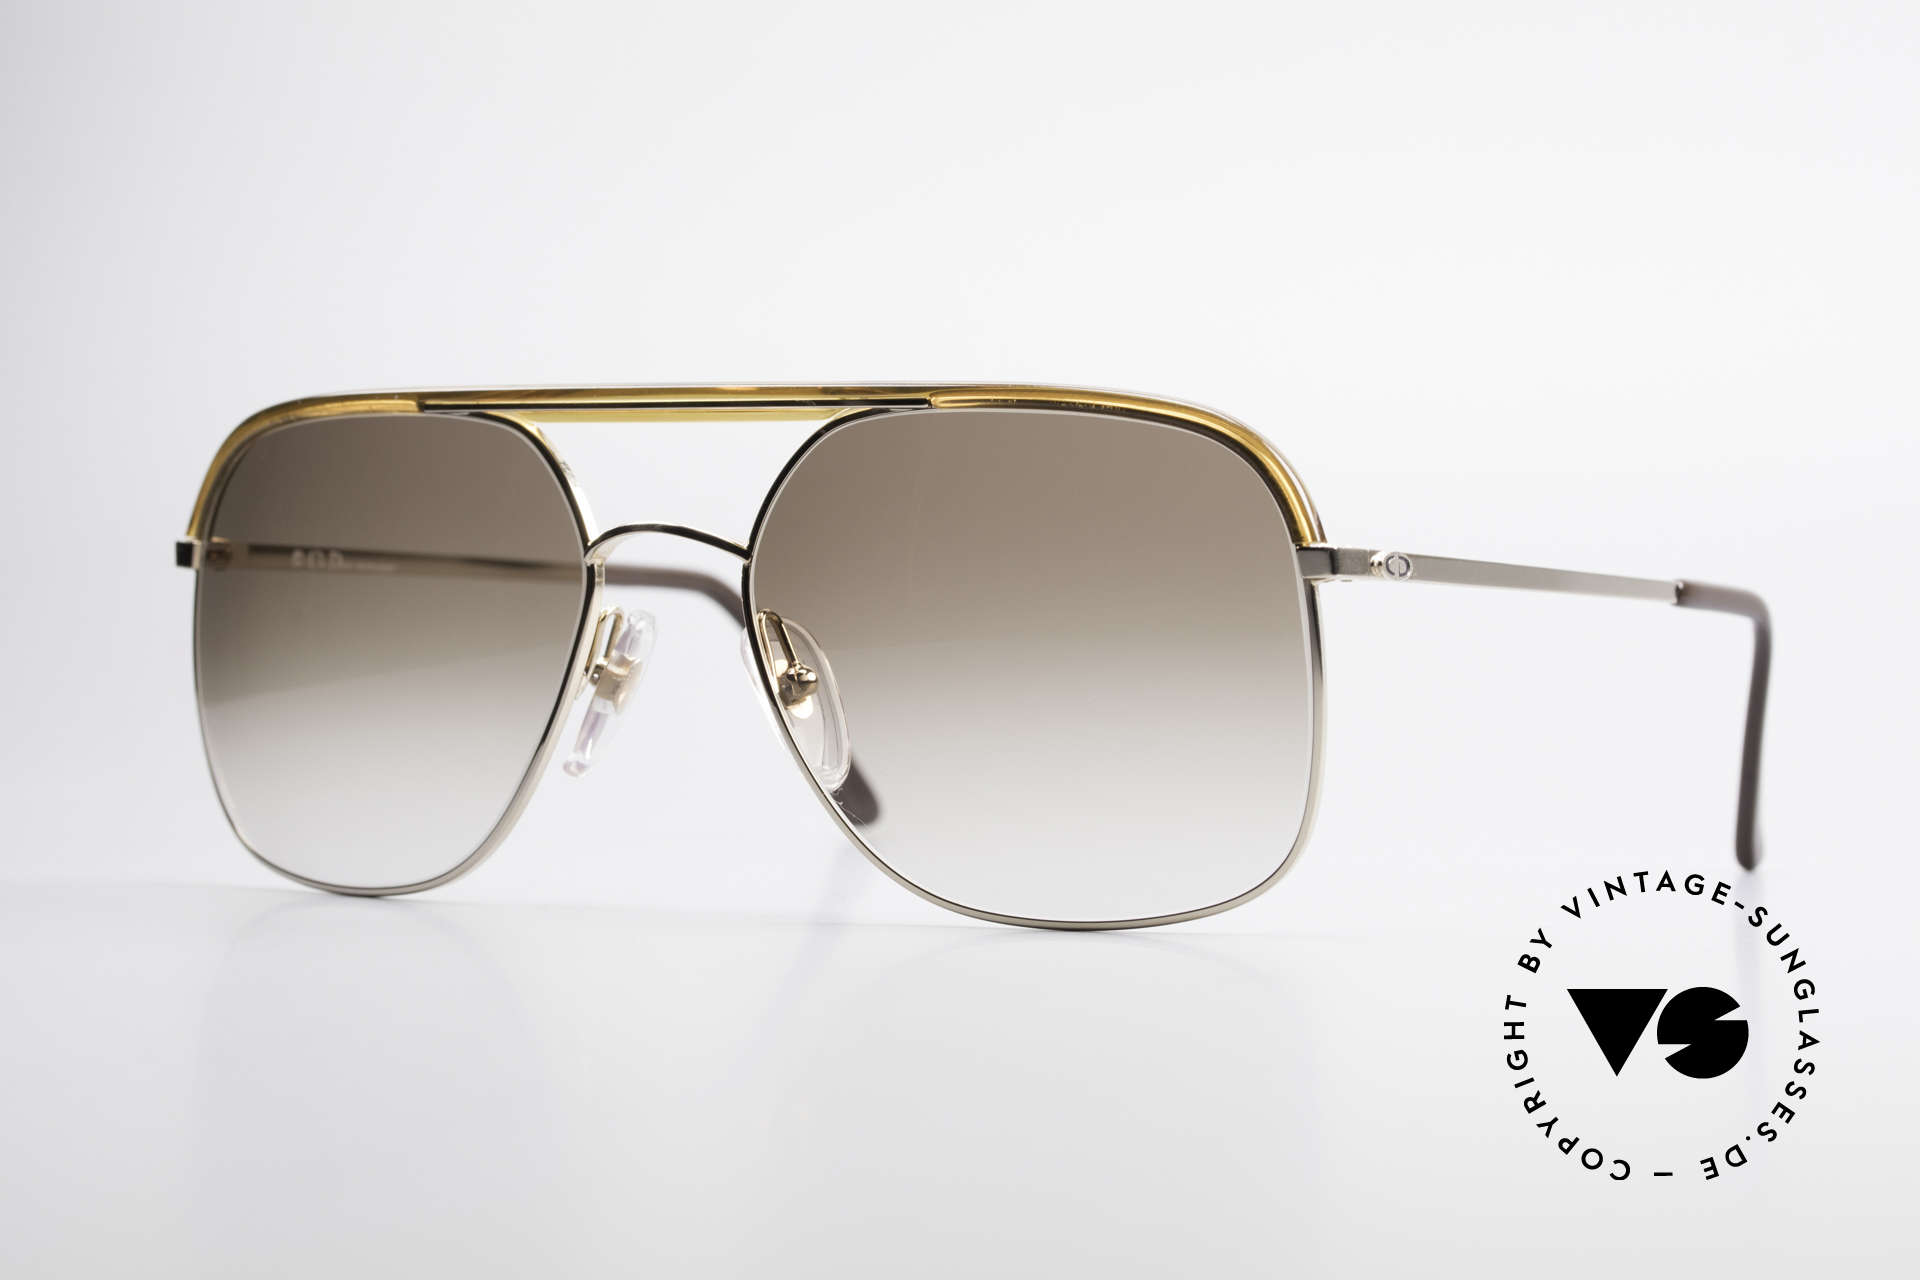 Sunglasses Christian Dior 2247 80 S Men S Shades Vintage